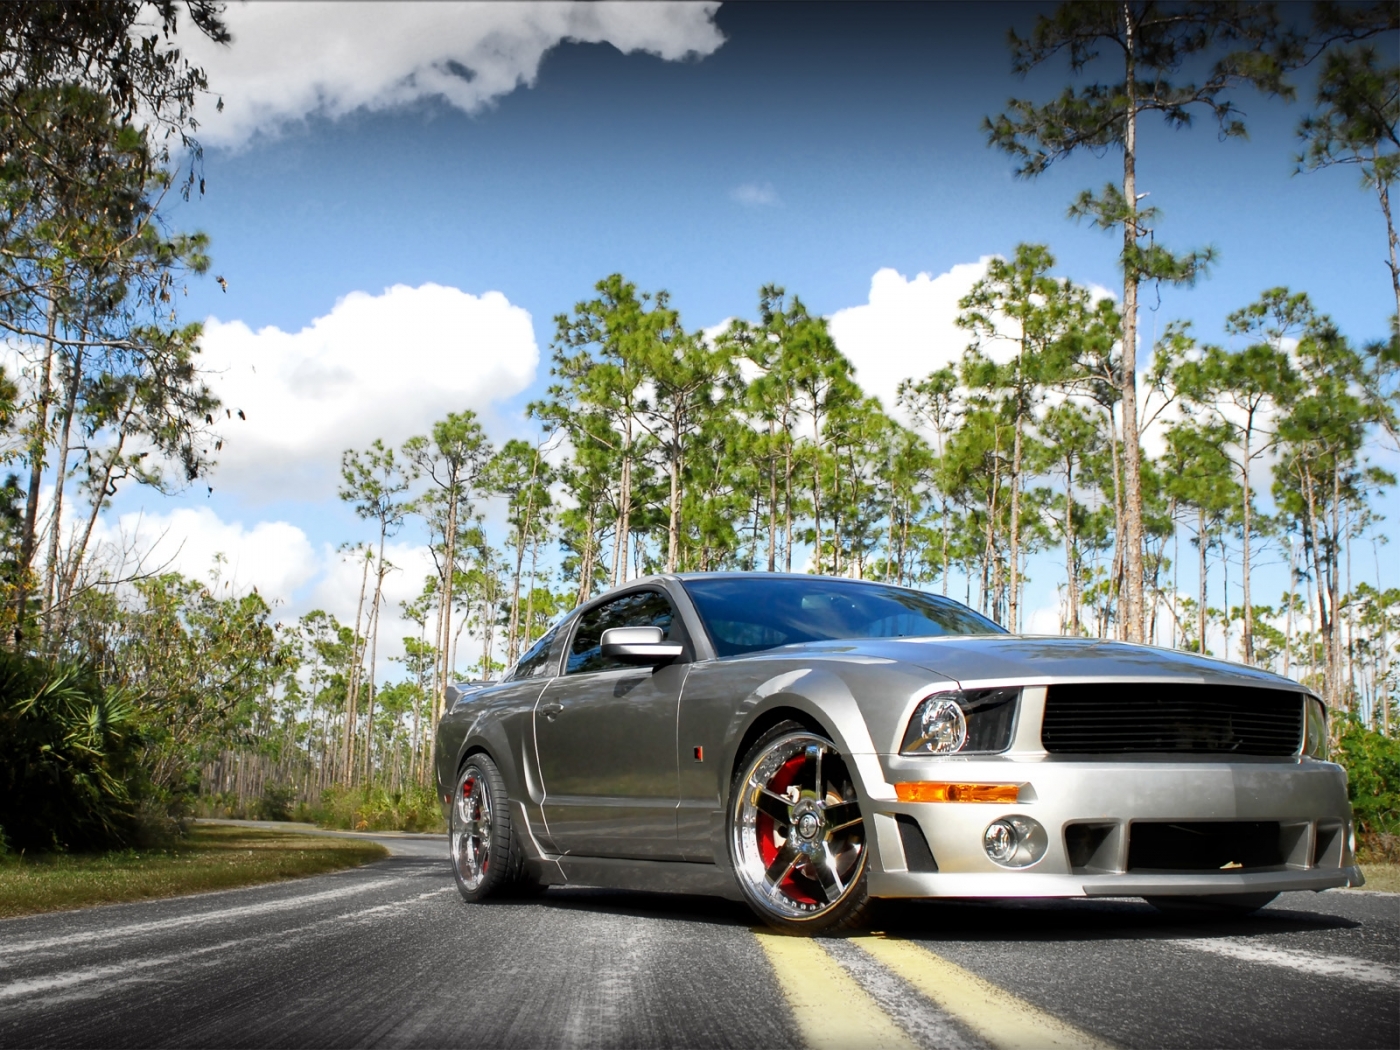 Cool Mustang HD Wallpaper